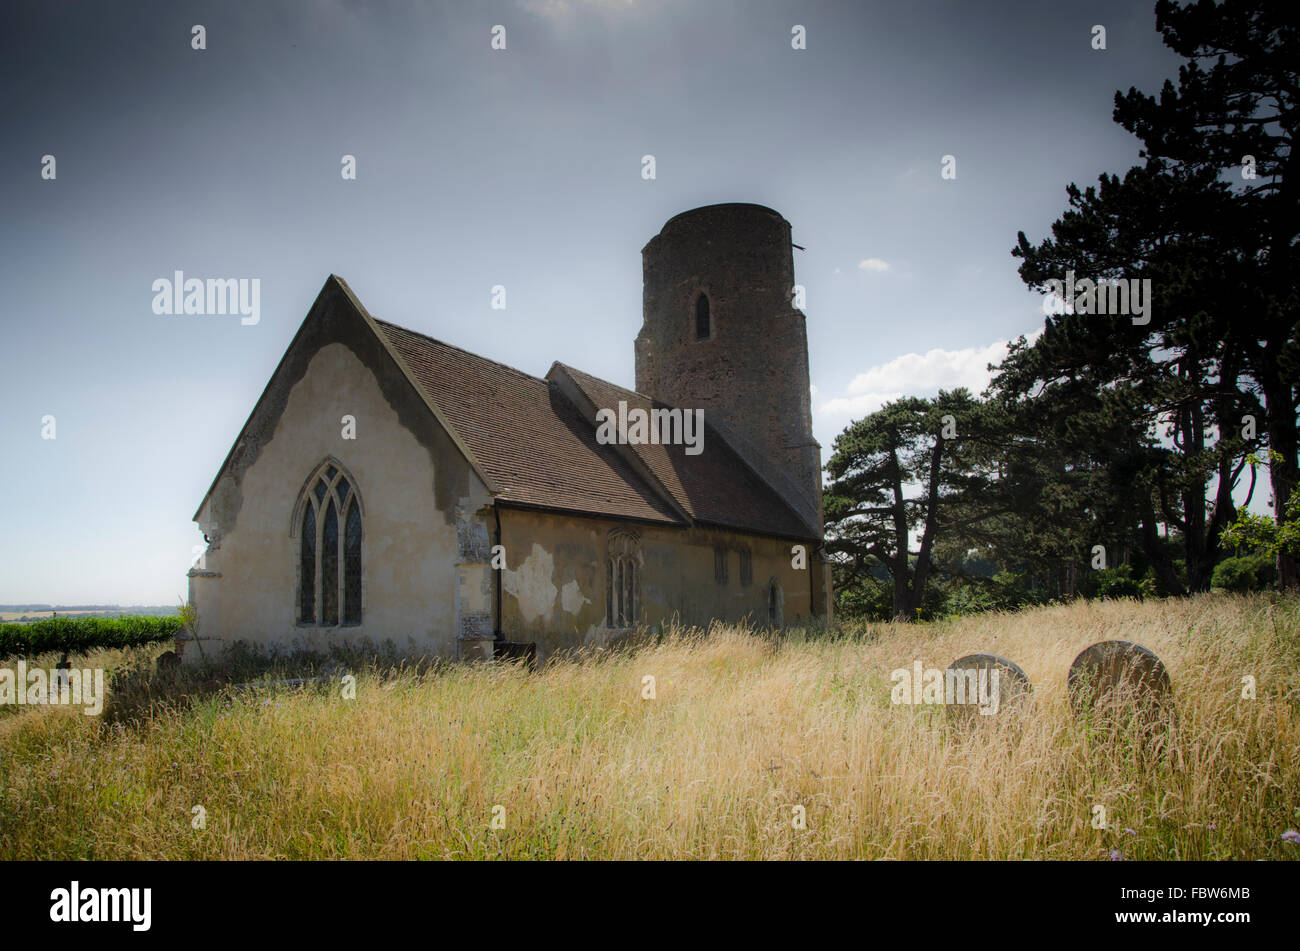 Ramsholt Church. Ramsholt, Suffolk, UK. Stock Photo